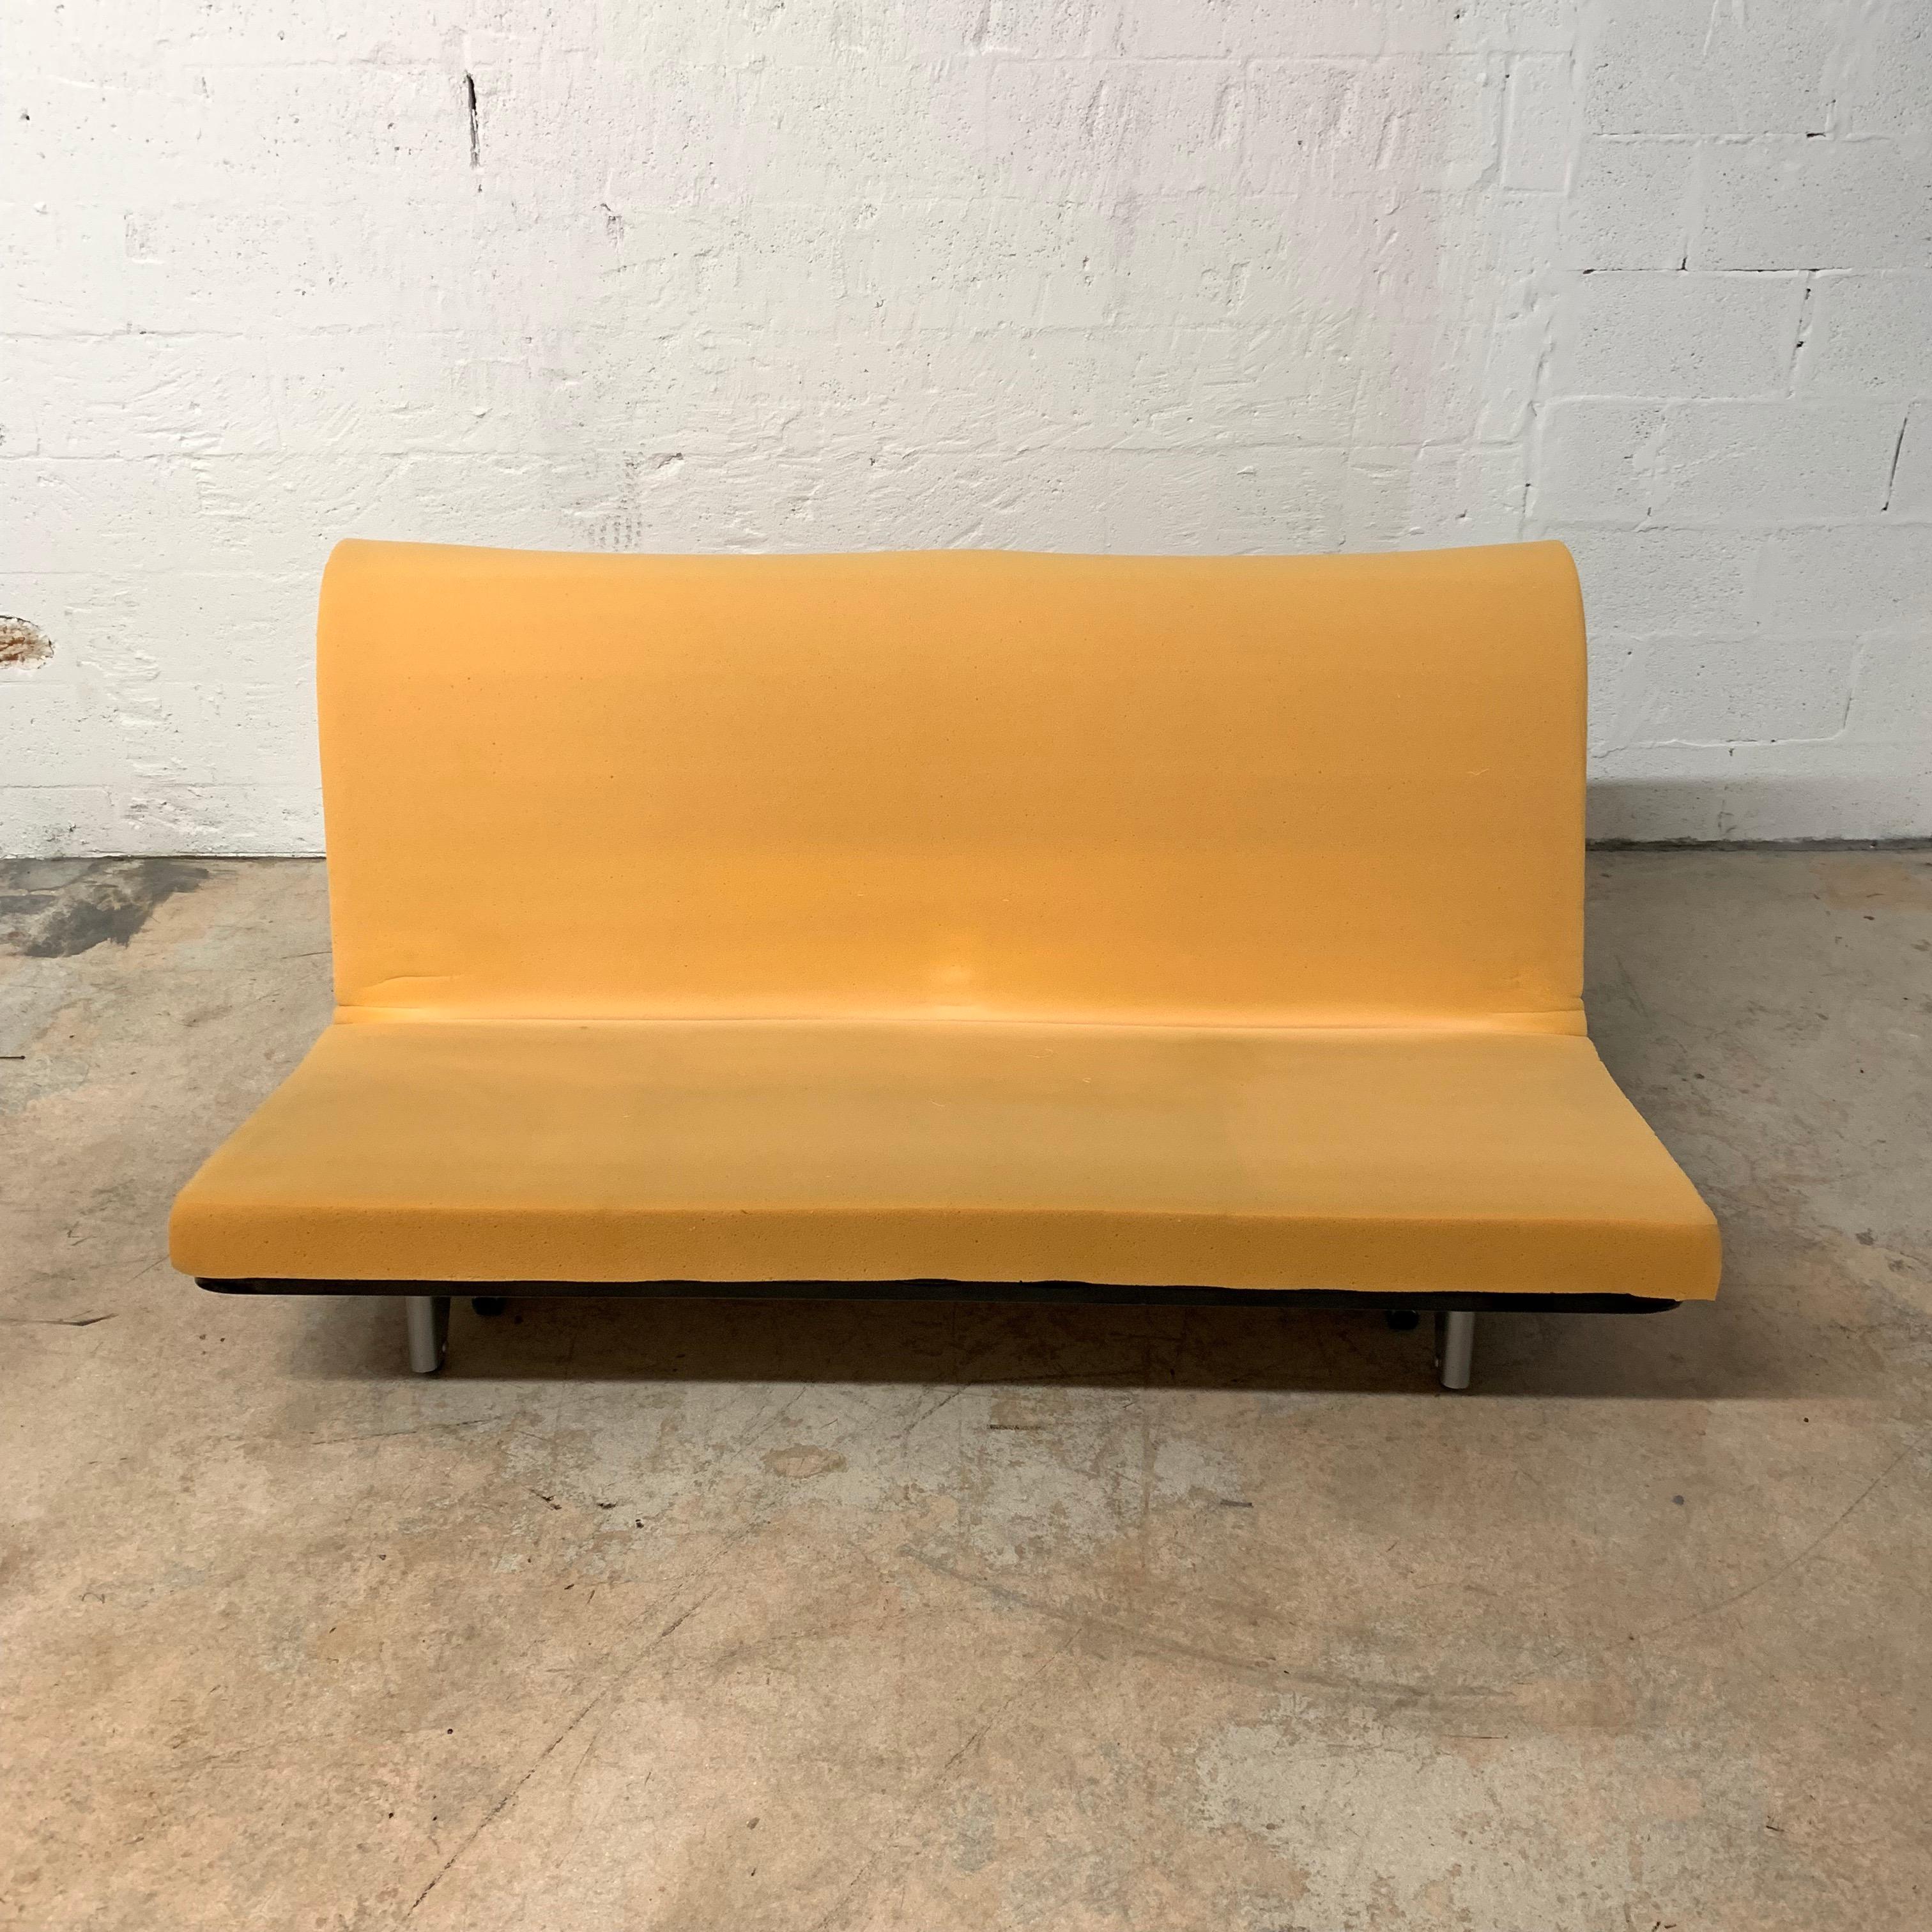 Wrought Iron Rare Togo Sleeper Sofa or Futon by Michael Ducaroy for Ligne Roset